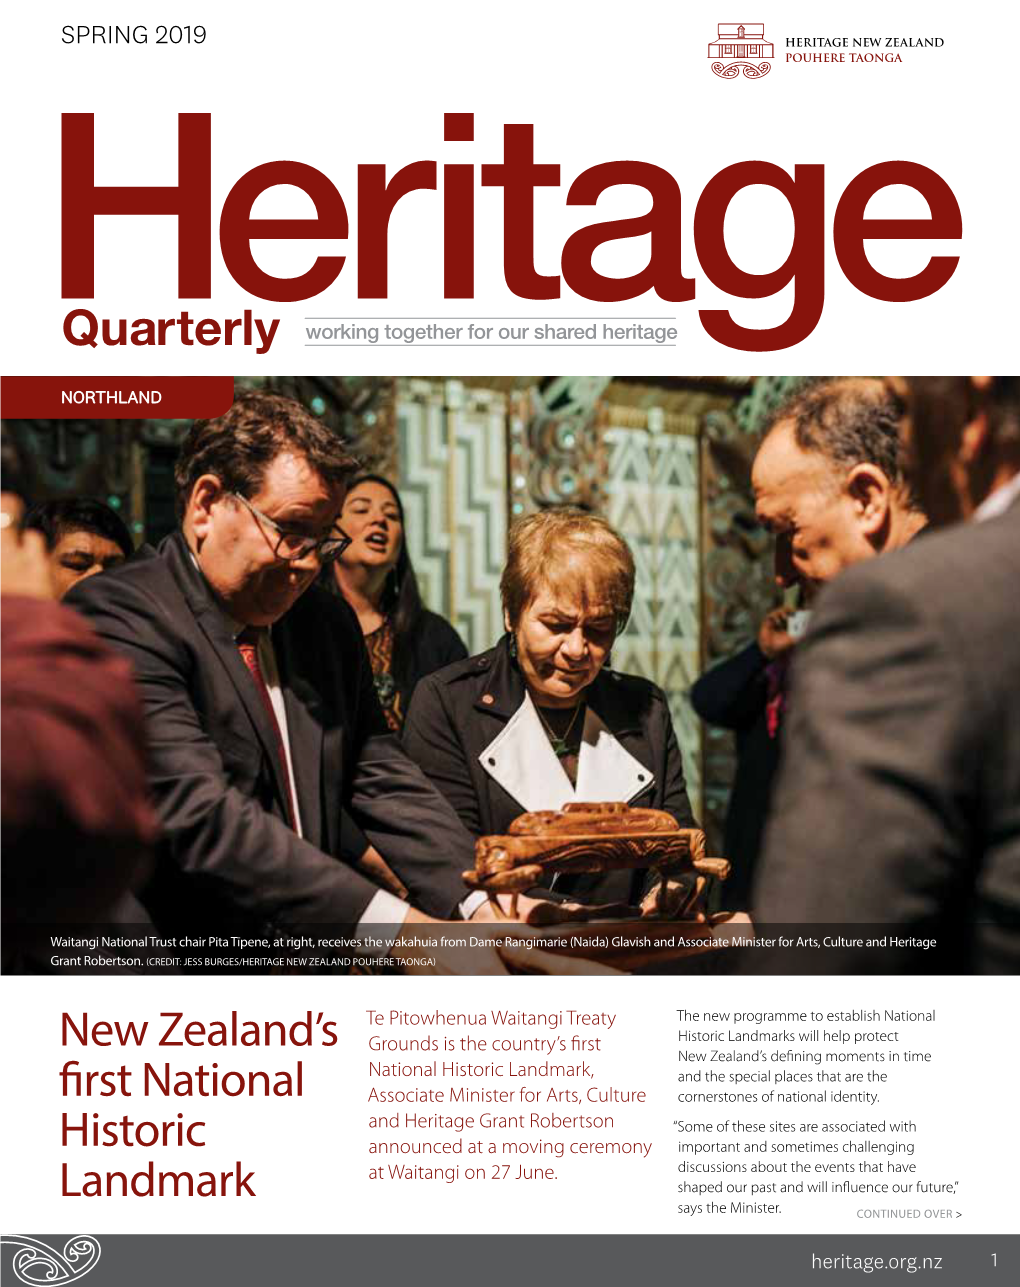 New Zealand's First National Historic Landmark